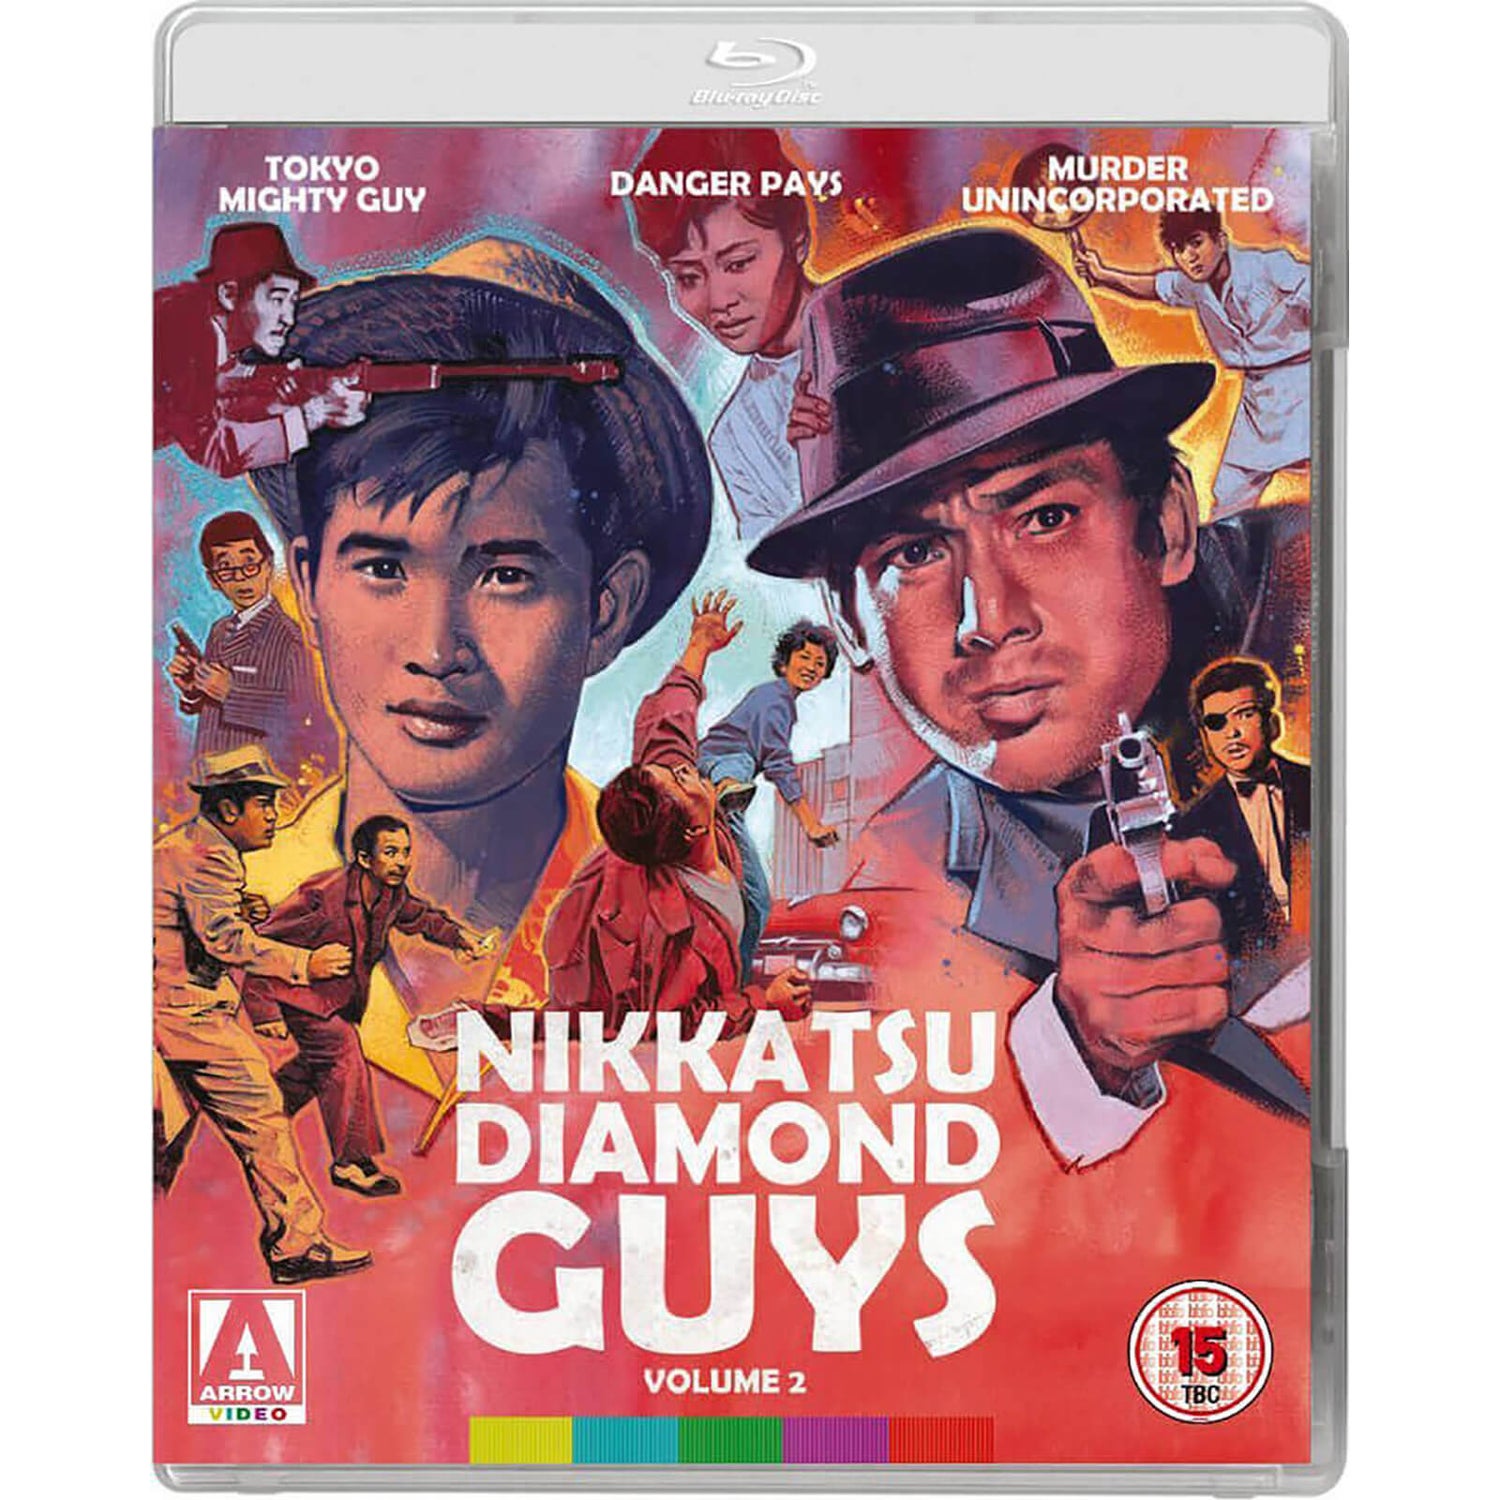 Nikkatsu Diamond Guys: Volume 2 - Dual Format (Includes DVD)